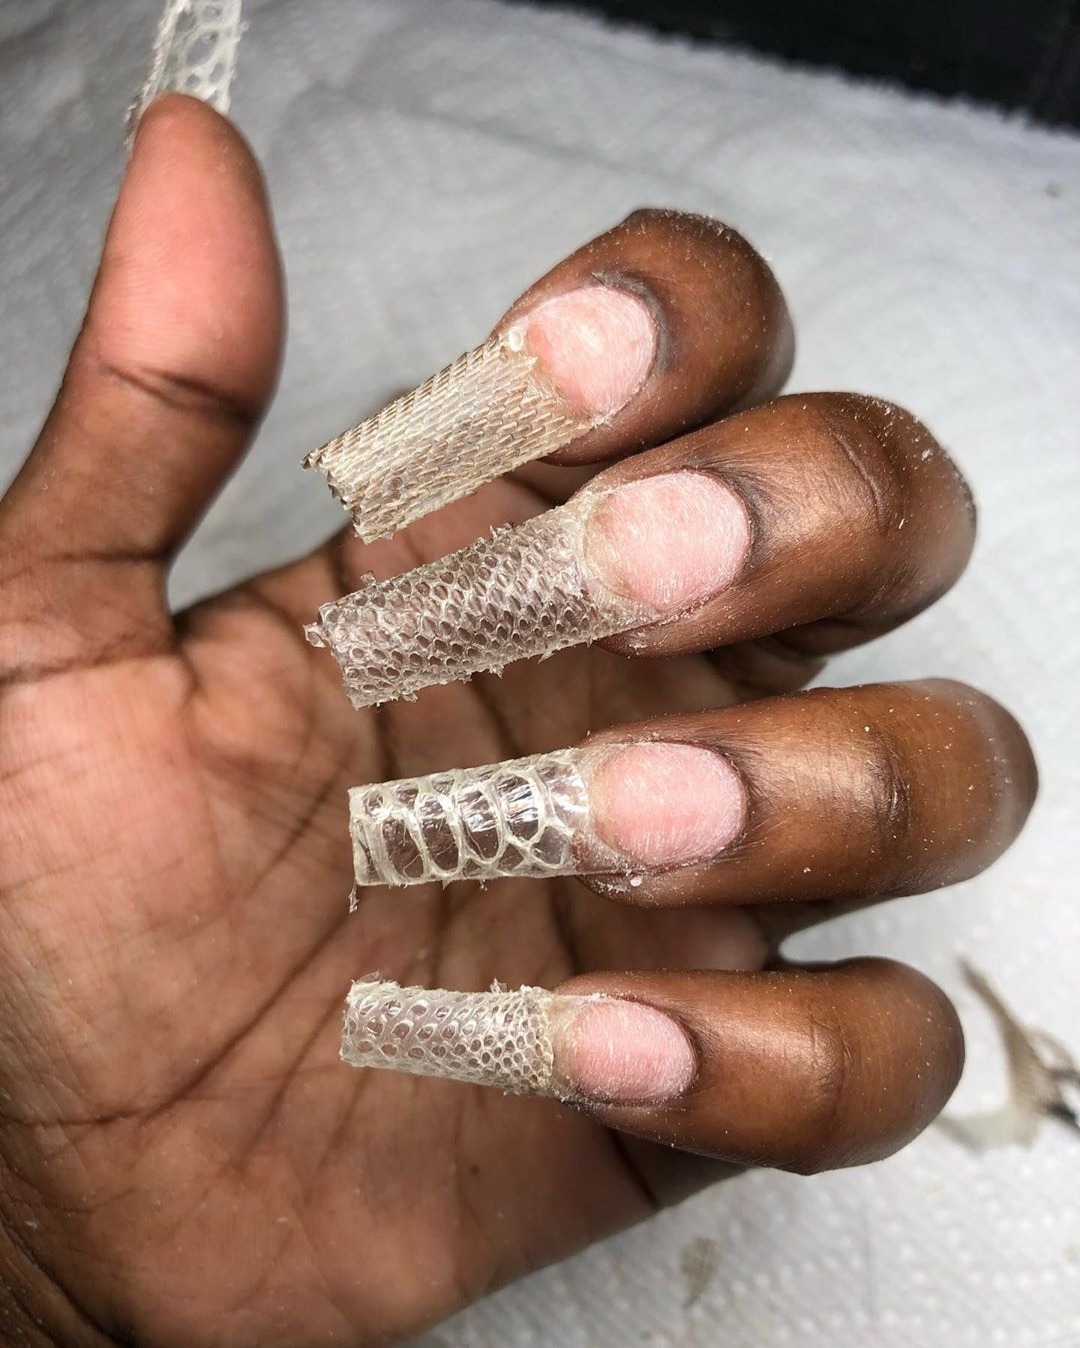 Stylish Nail Art Design Ideas To Wear in 2021 : Snakeskin nails